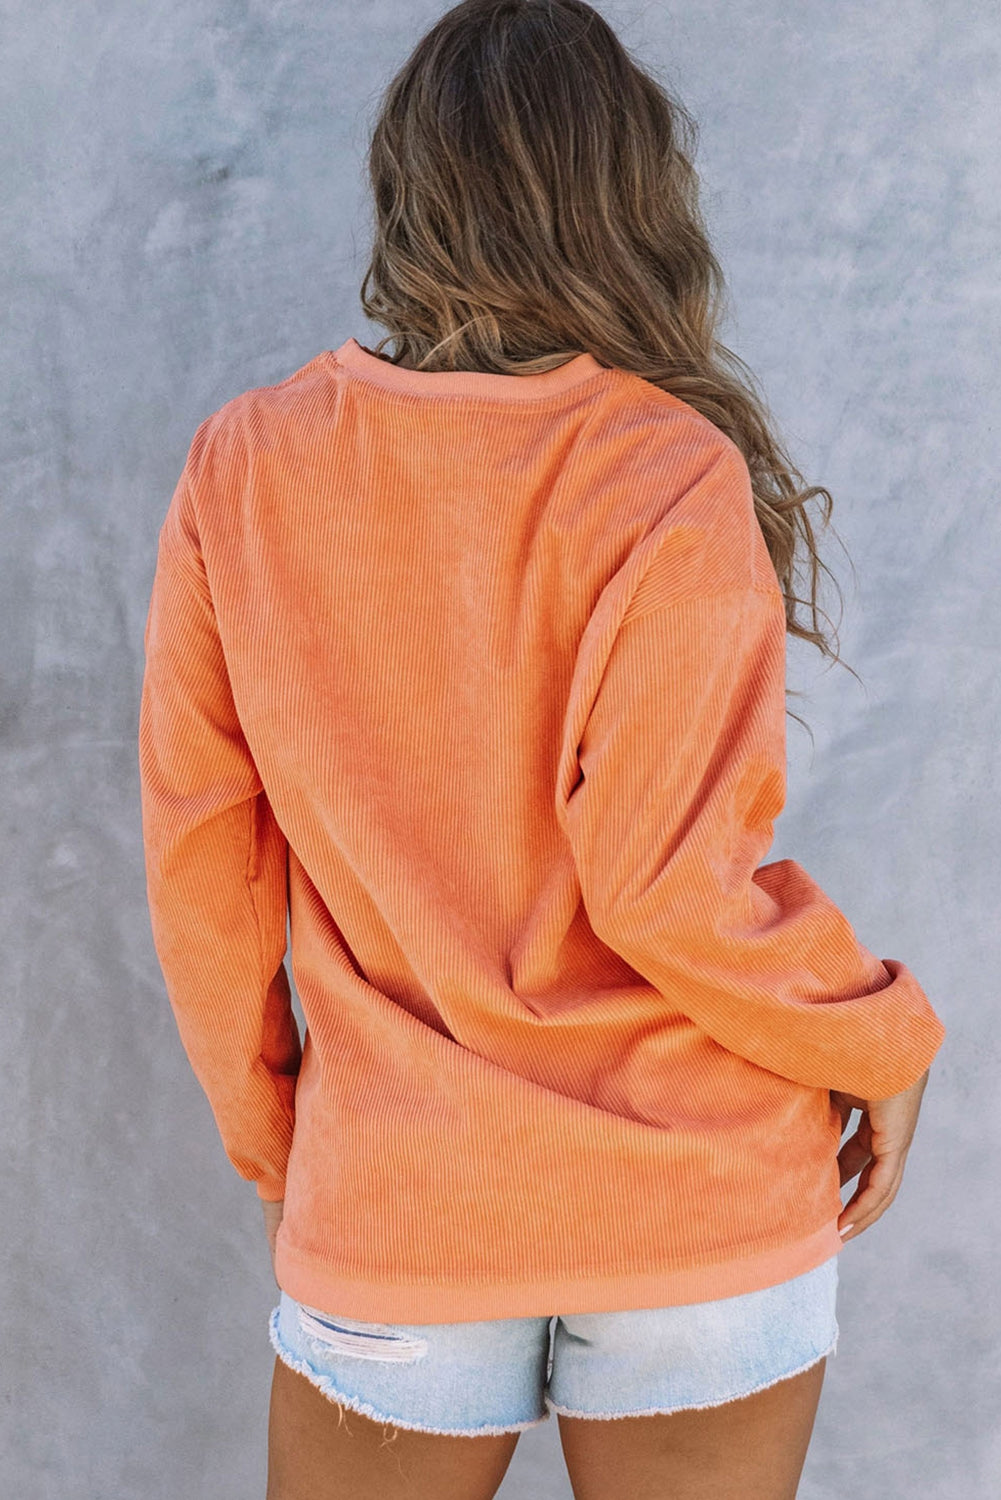 Rosy Brown SPOOKY SEASON Graphic Sweatshirt Sentient Beauty Fashions Apparel &amp; Accessories